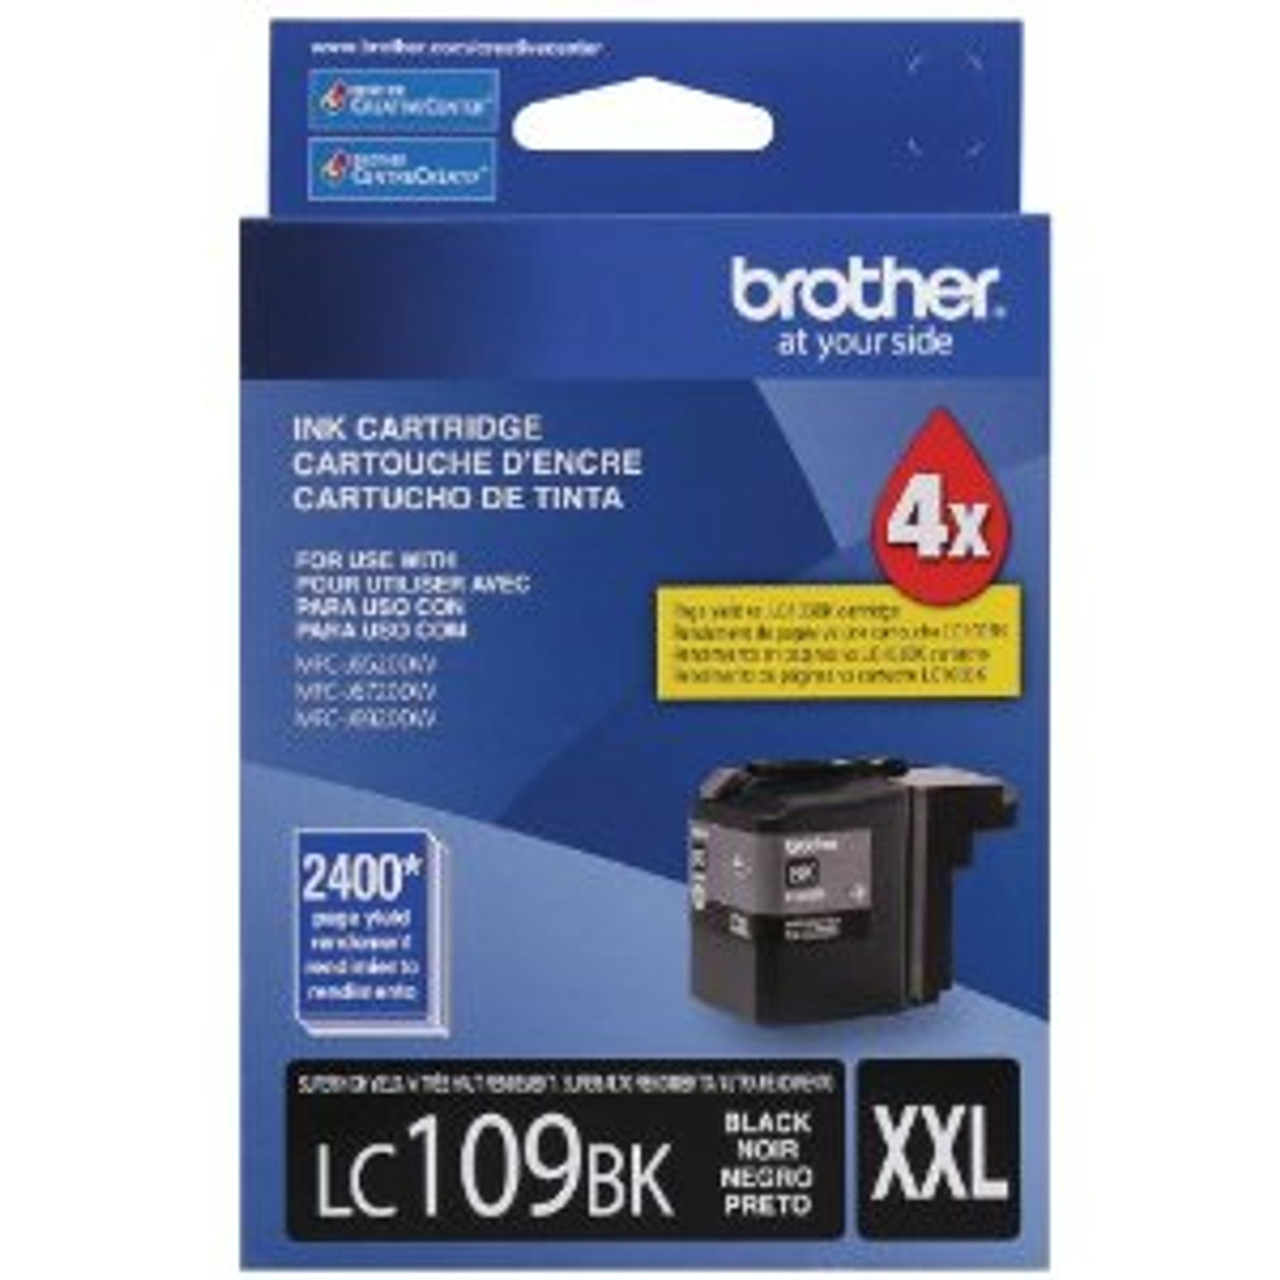 Brother LC-109BK Black ink cartridge